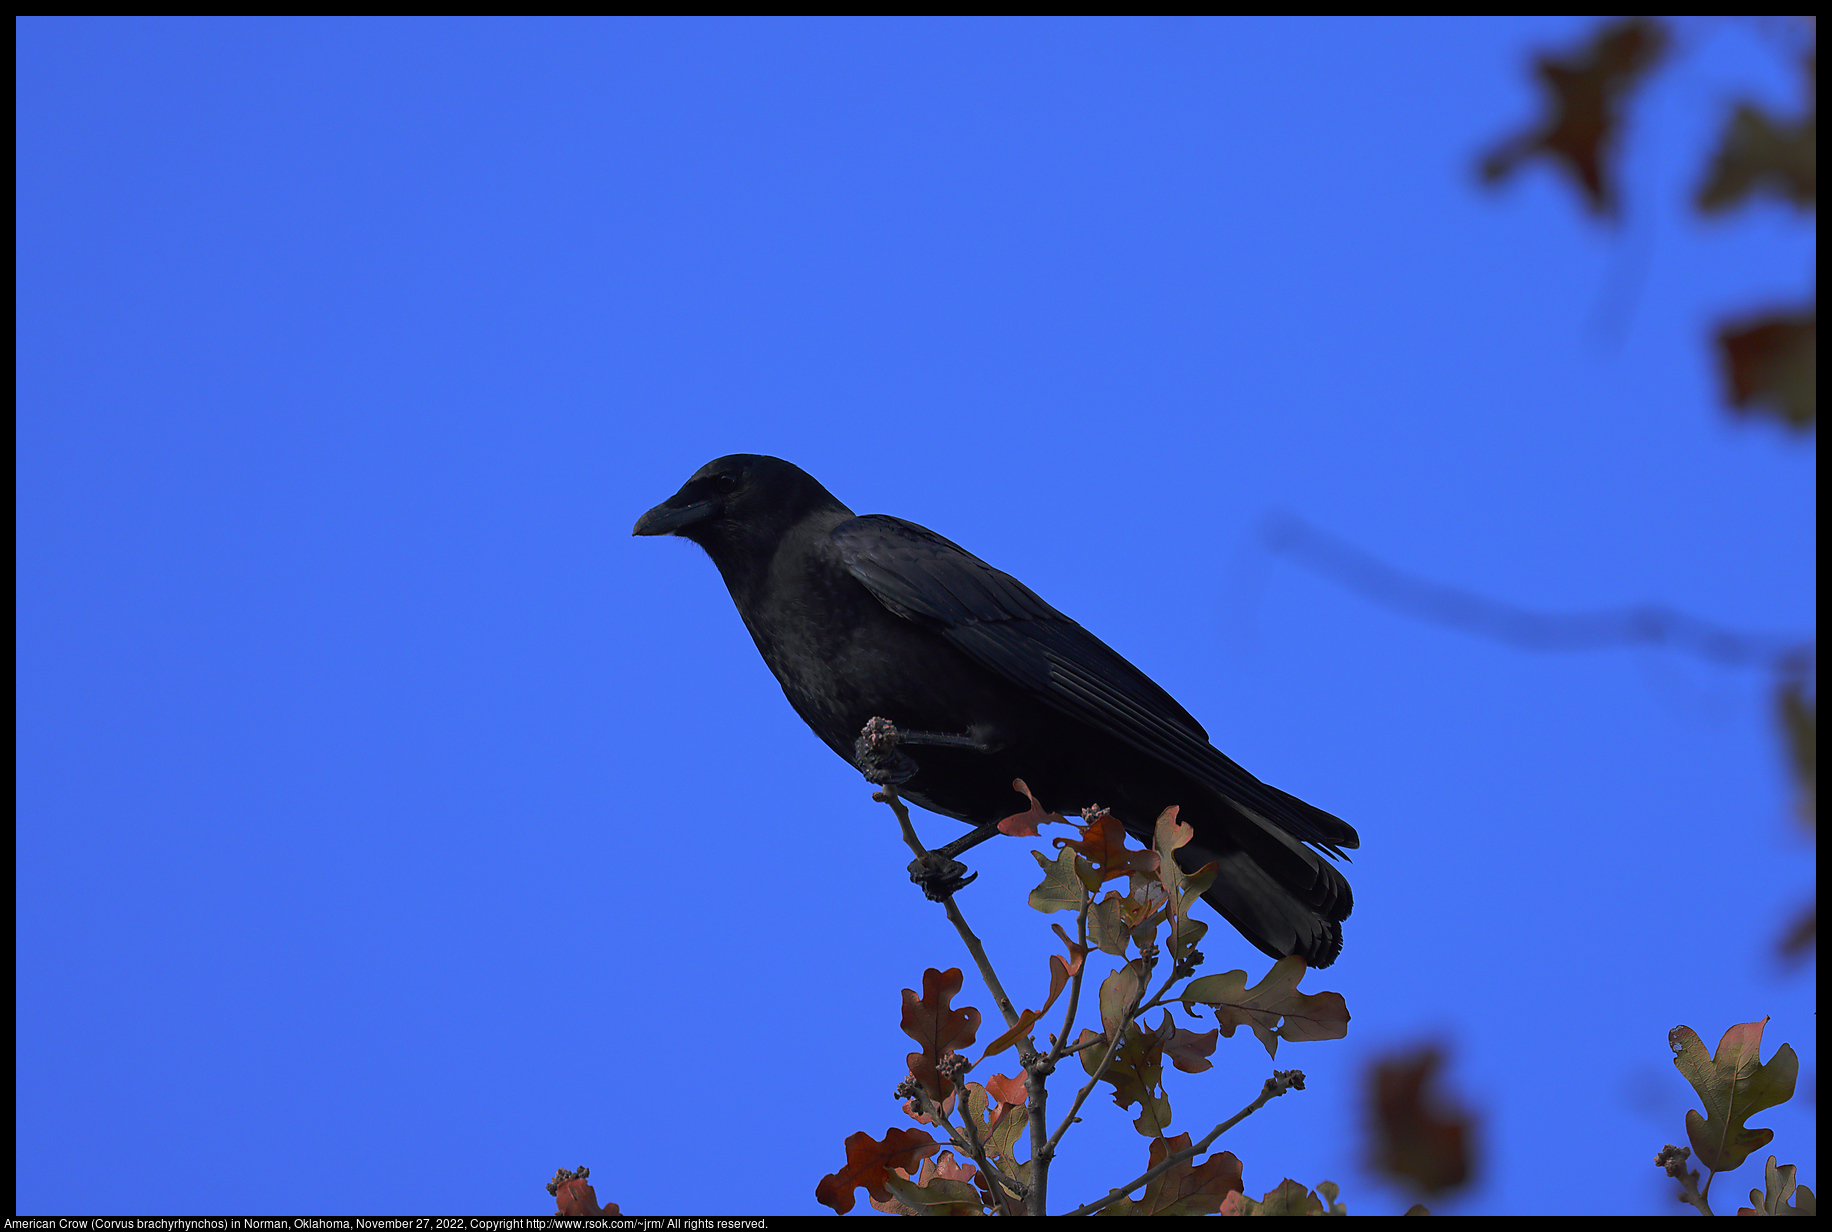 American Crow (Corvus brachyrhynchos) in Norman, Oklahoma, November 27, 2022